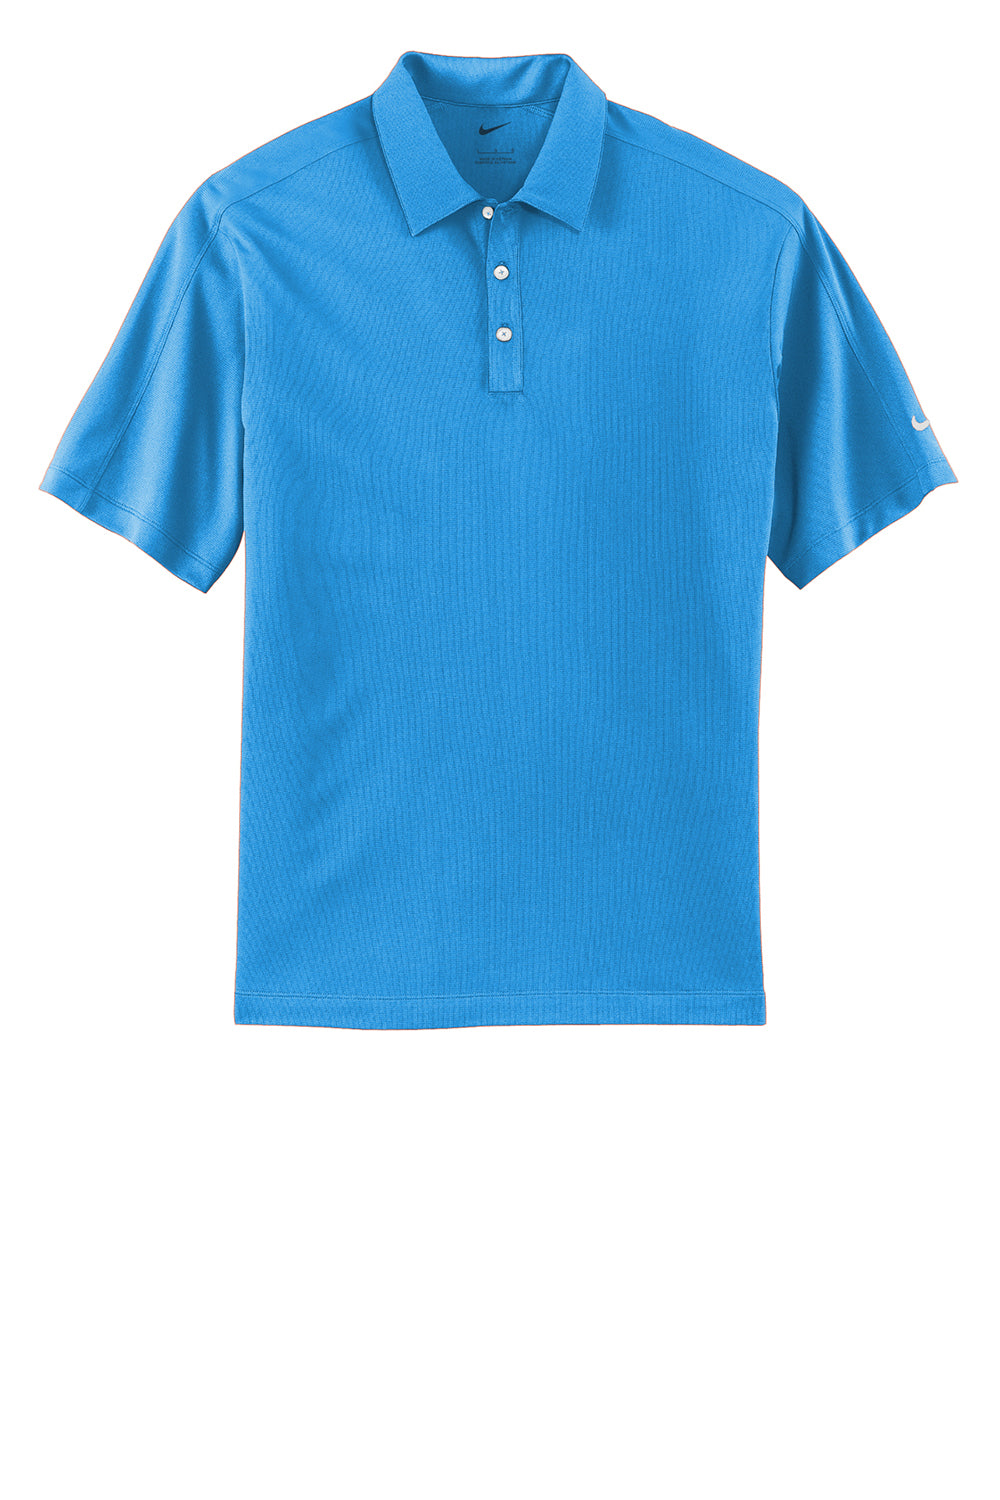 Nike 266998 Mens Tech Sport Dri-Fit Moisture Wicking Short Sleeve Polo Shirt Pacific Blue Flat Front